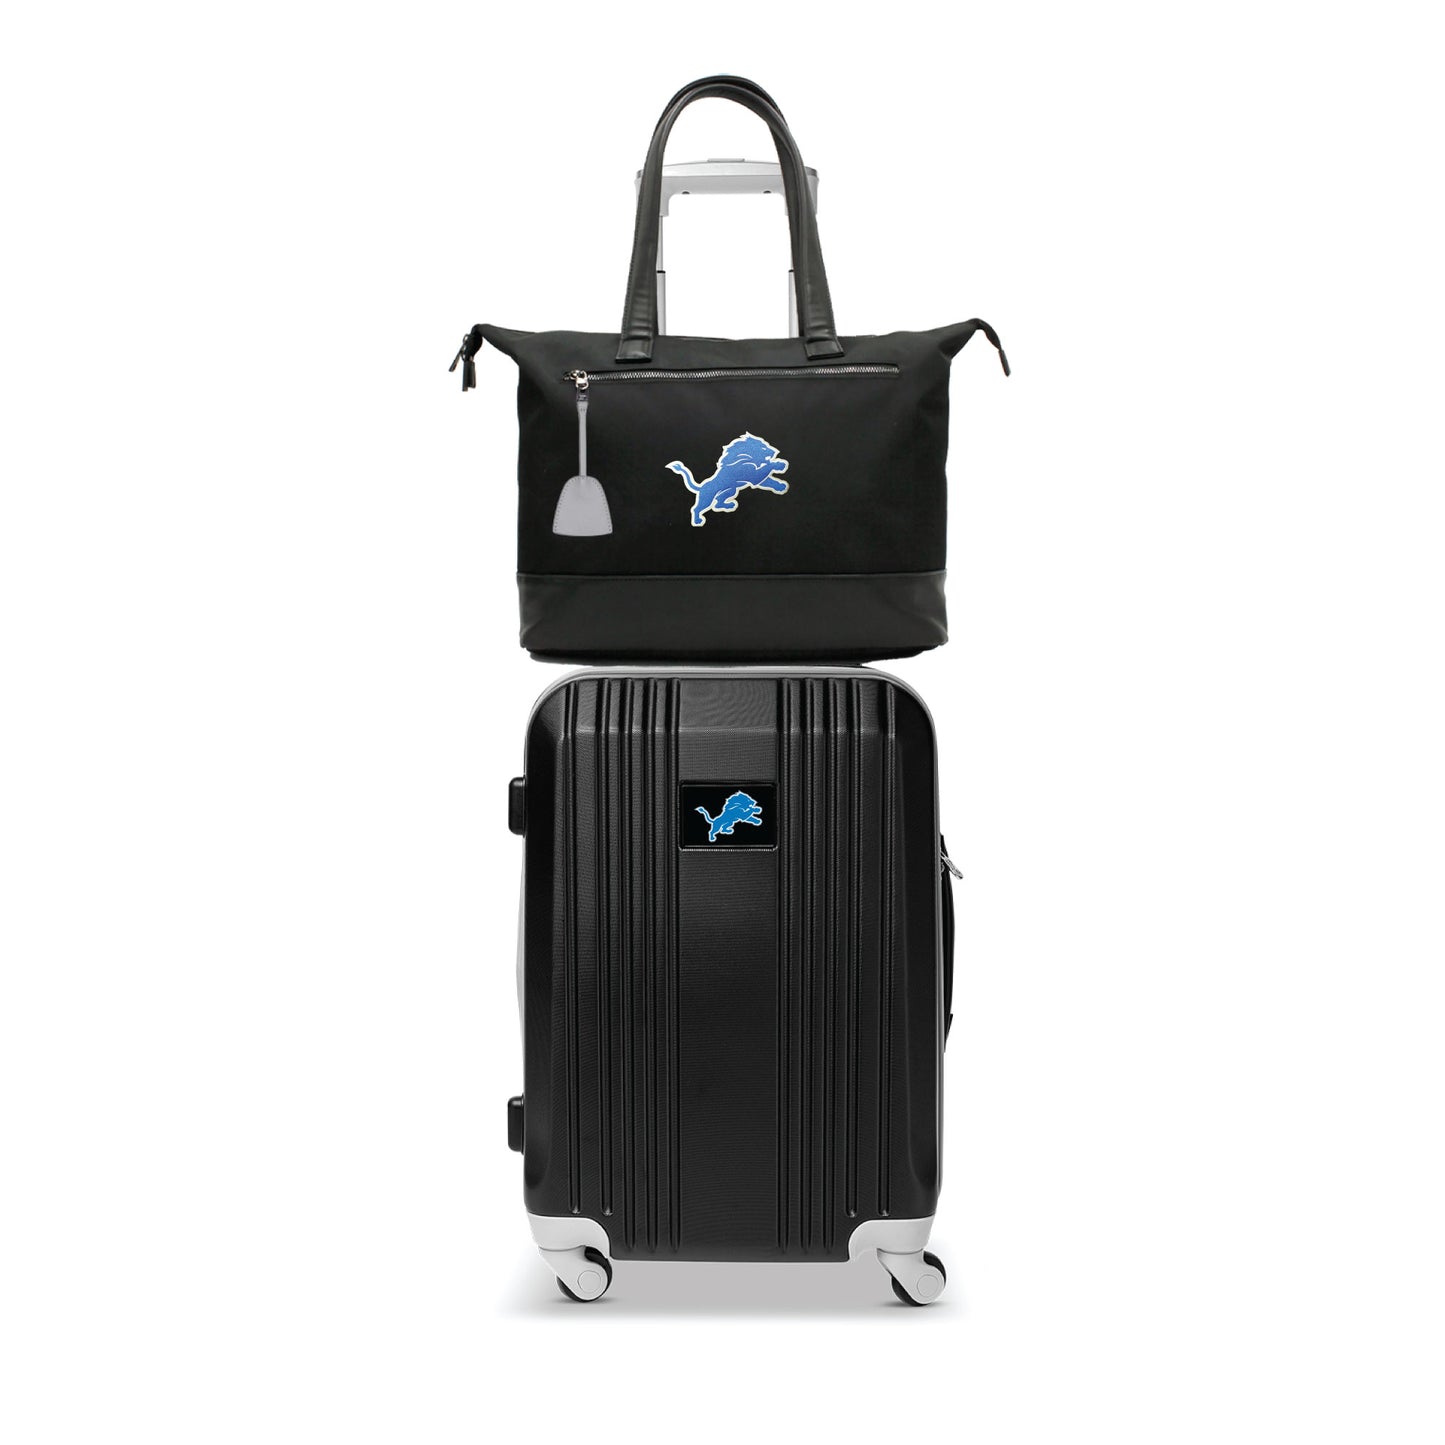 Detroit Lions Premium Laptop Tote Bag and Luggage Set